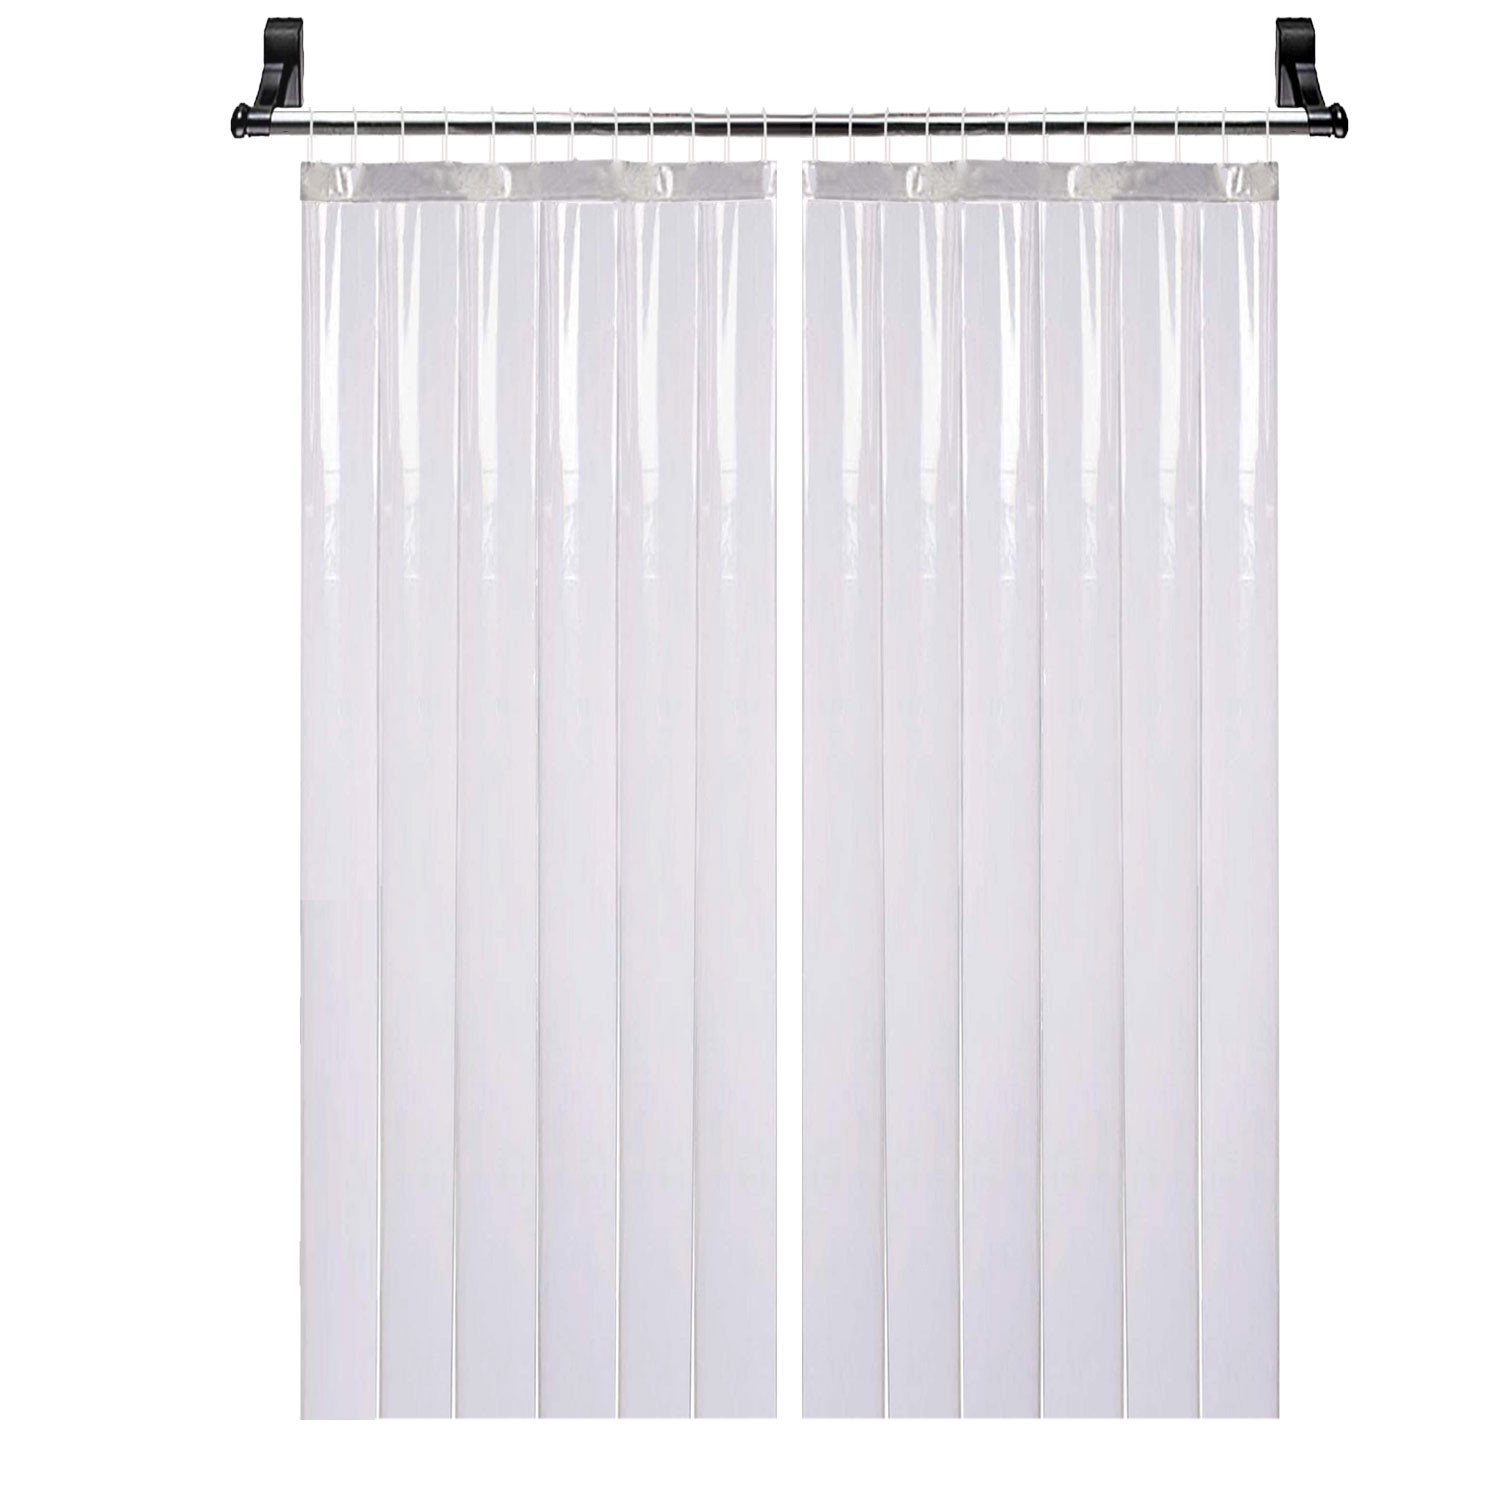 Kuber Industries 0.50mm 6 strips Stain Resistant, Waterproof PVC Shower/AC Curtain, 9 Feet (Tranasparent)